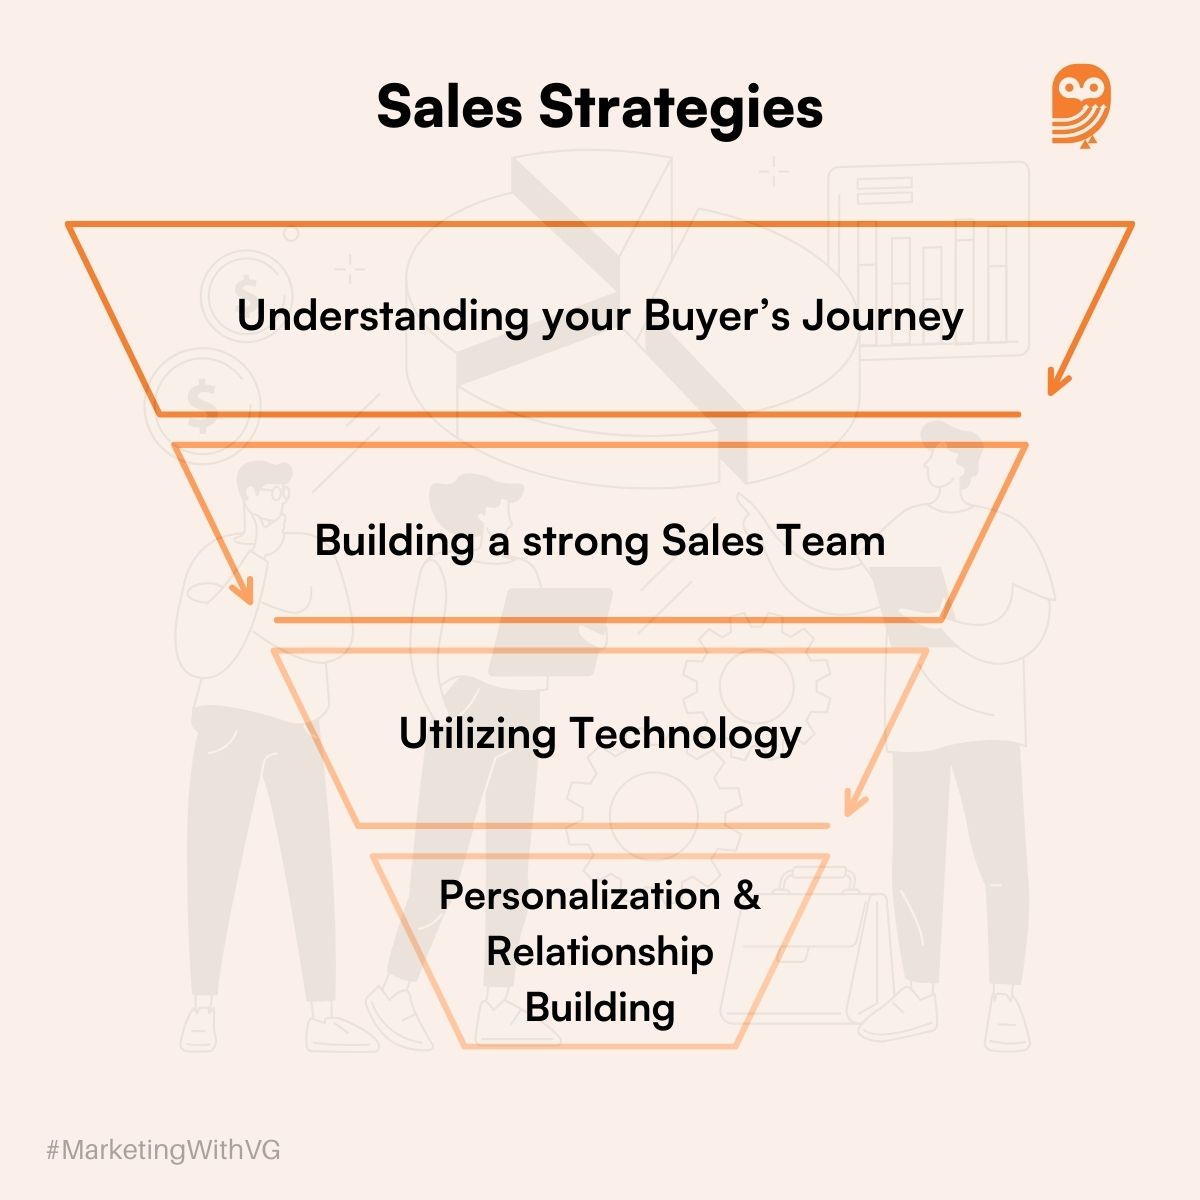 Sales strategies for B2B Business